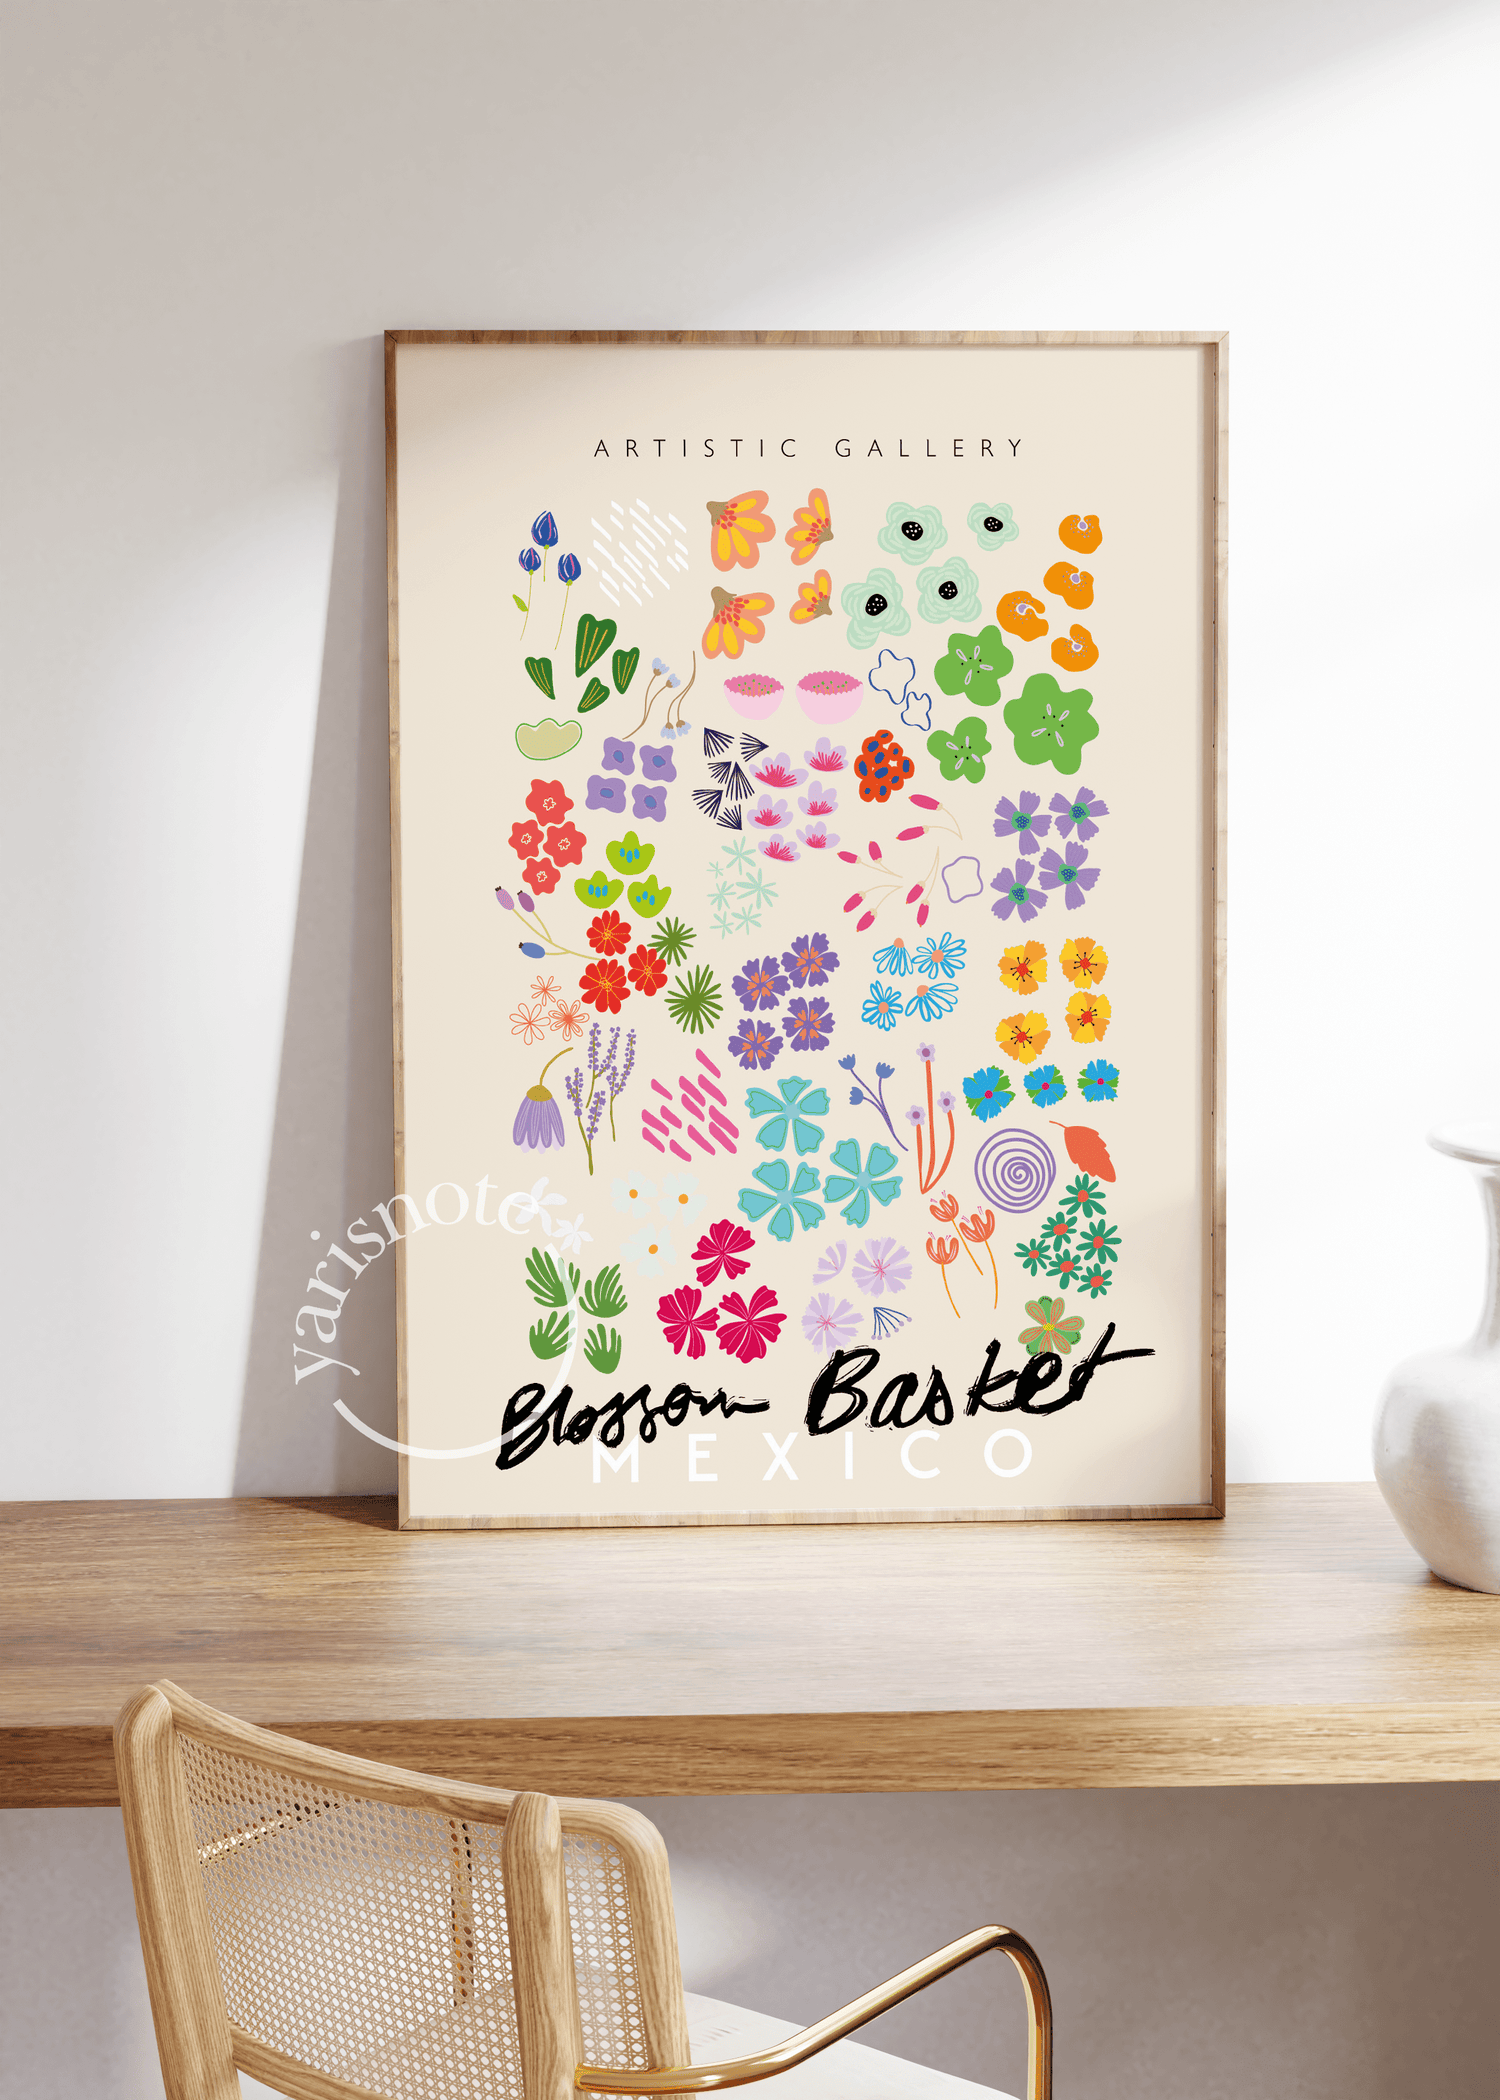 Blossom Basket Mexico Unframed Poster